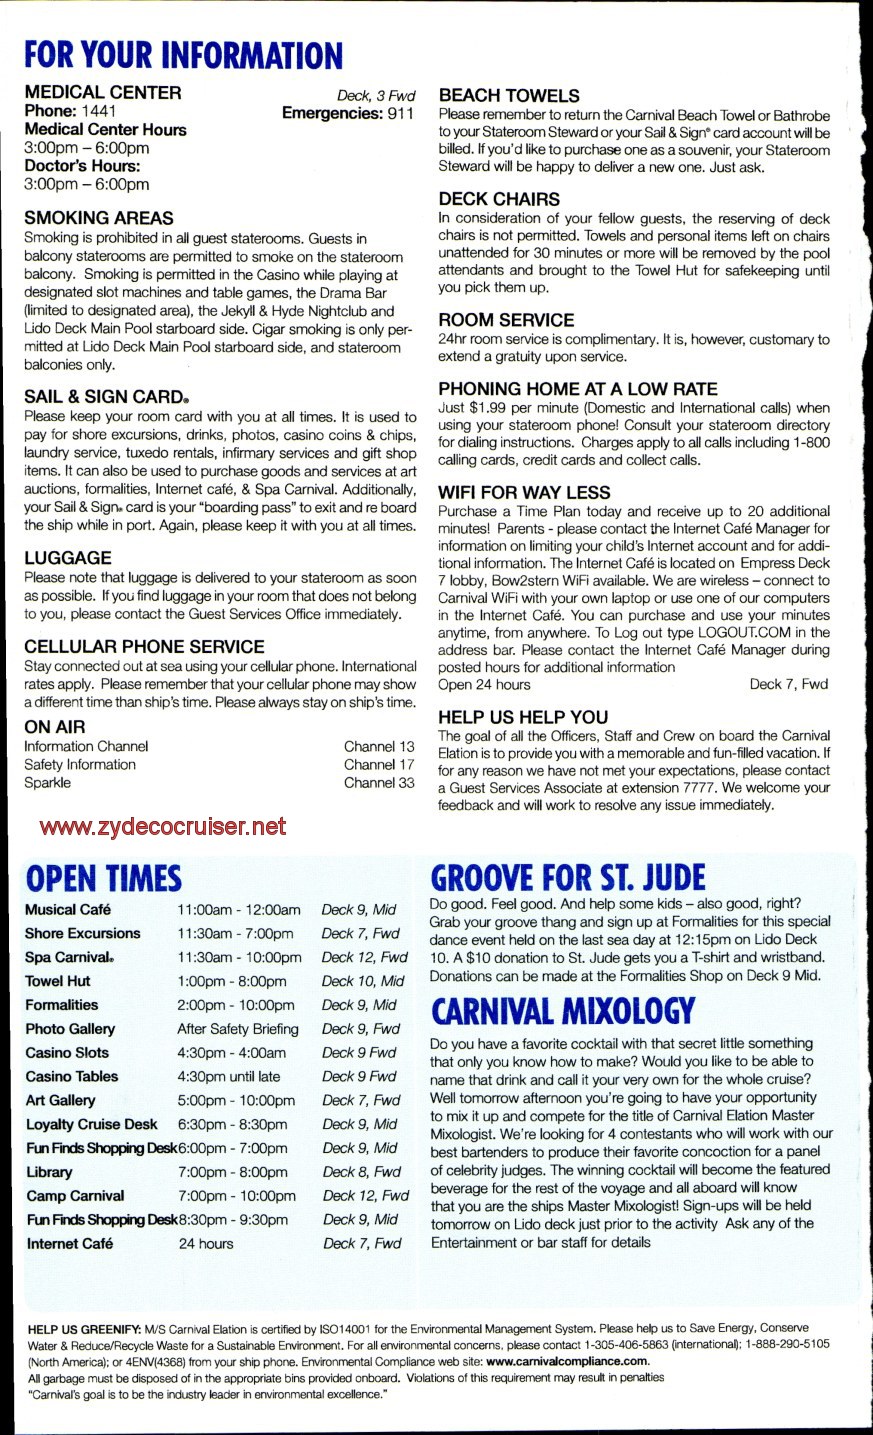 004: Carnival Elation 5 Day Fun Times, Feb 4, 2013, Page 4, 